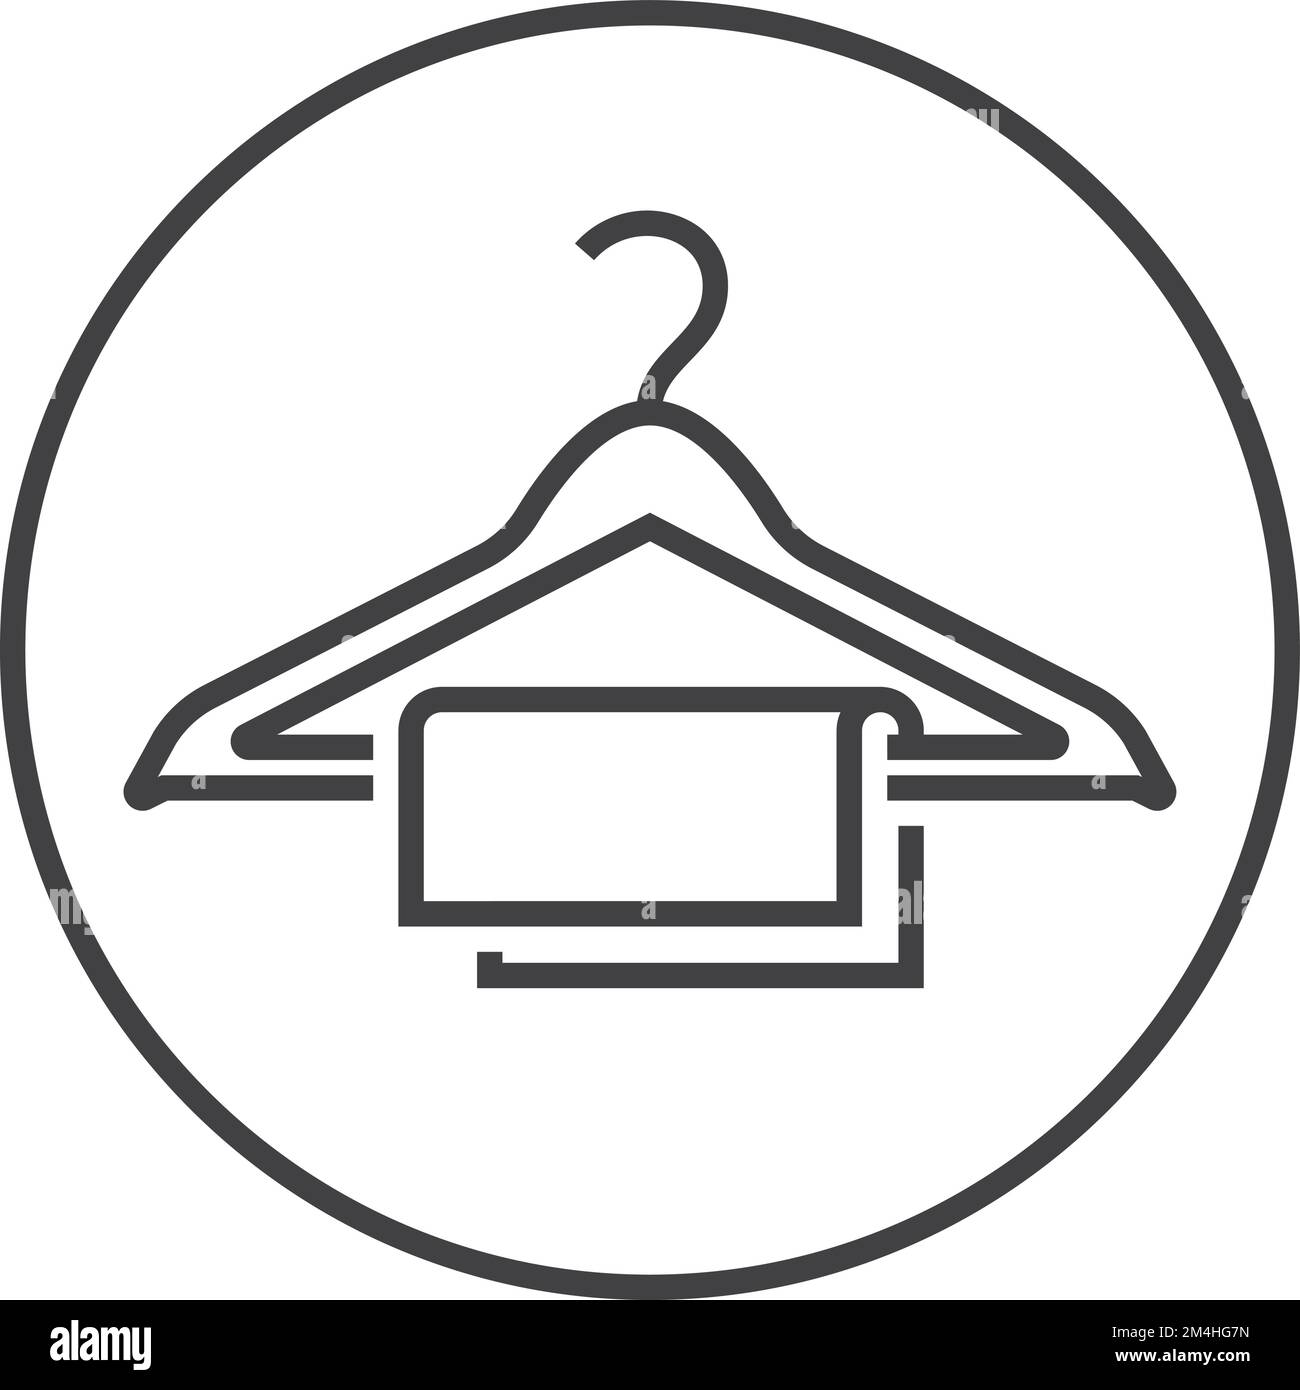 Clothes hanger icon. Round hotel towel symbol Stock Vector